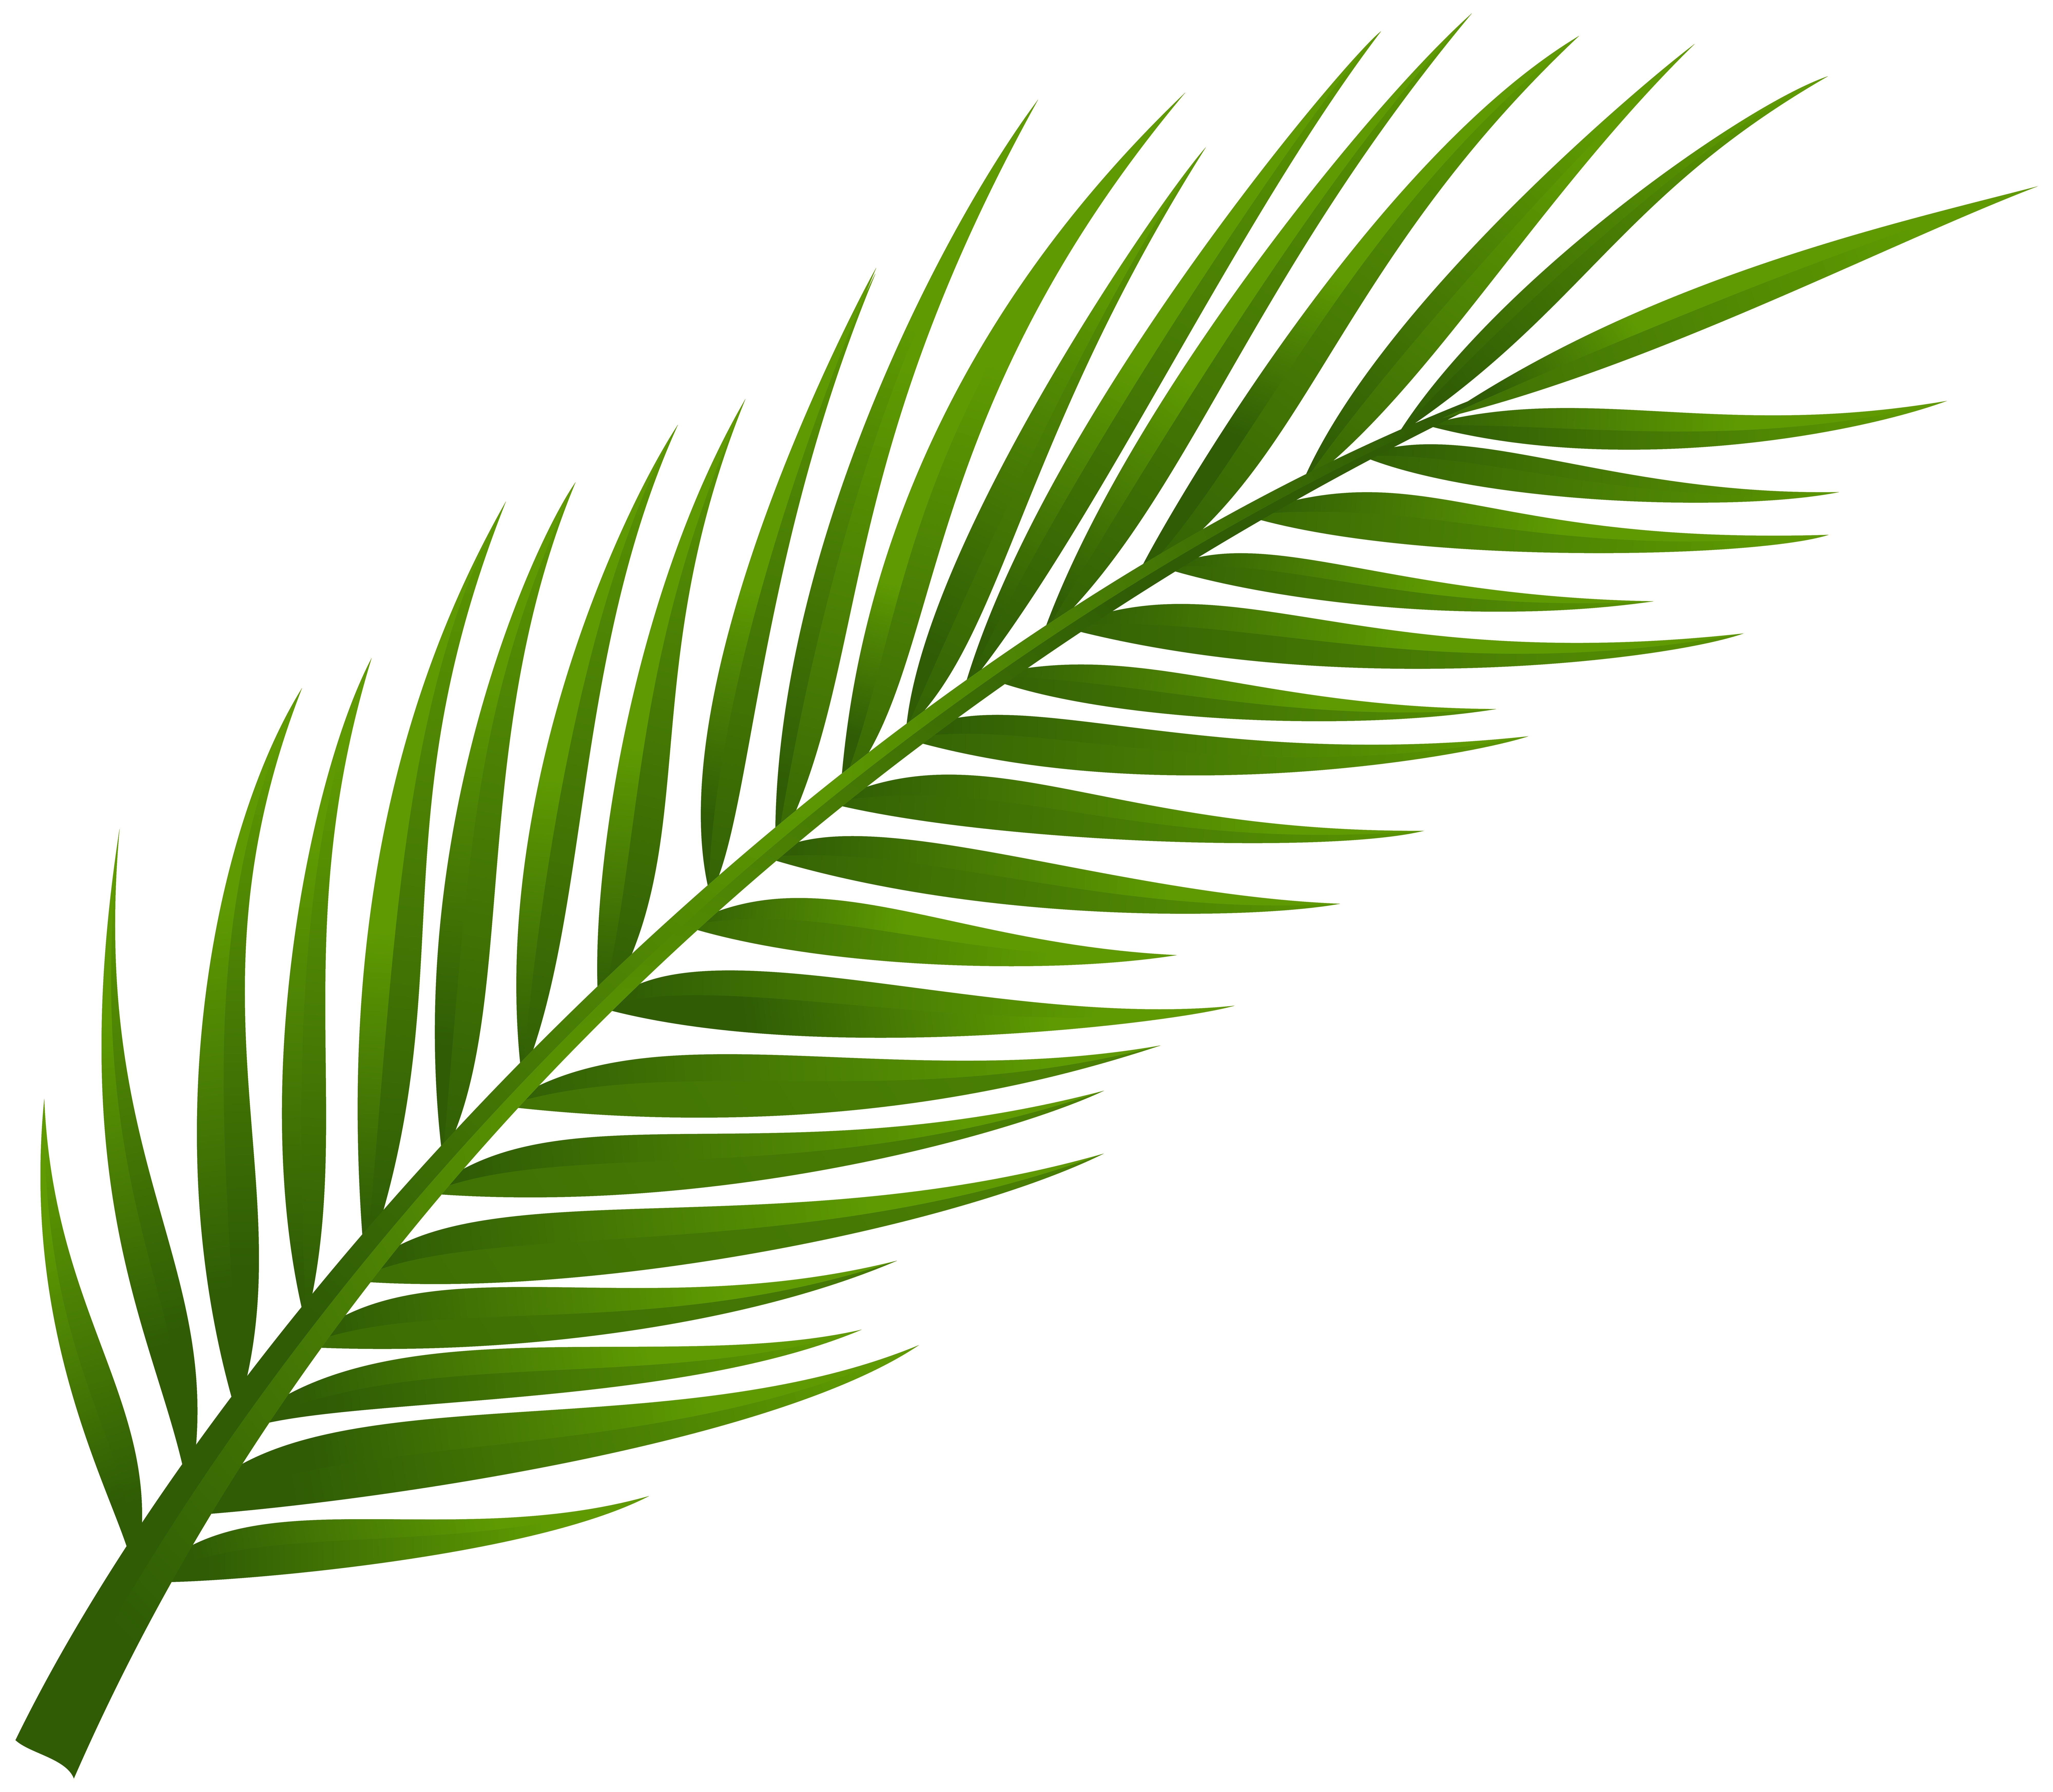 Palm leafs photo